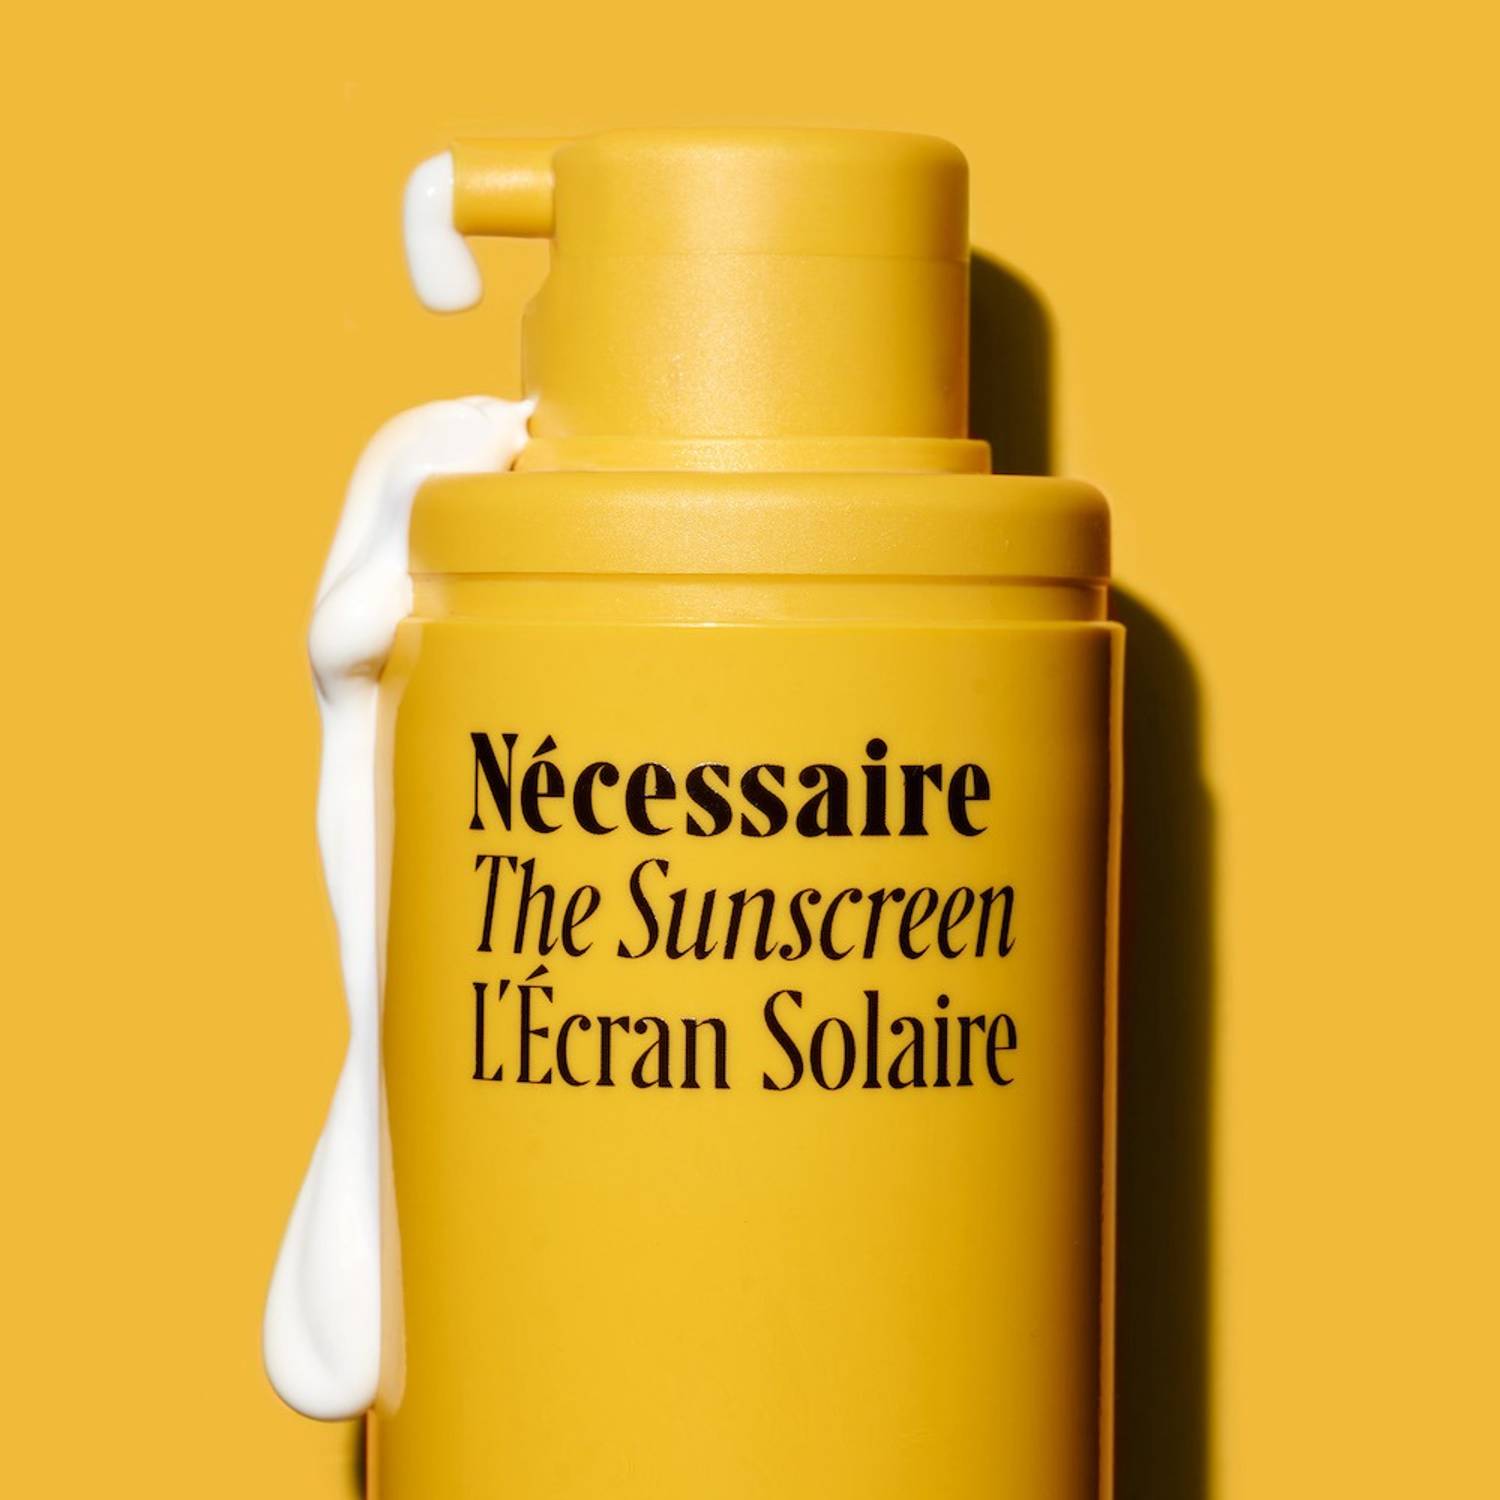 Necessaire The Sunscreen

